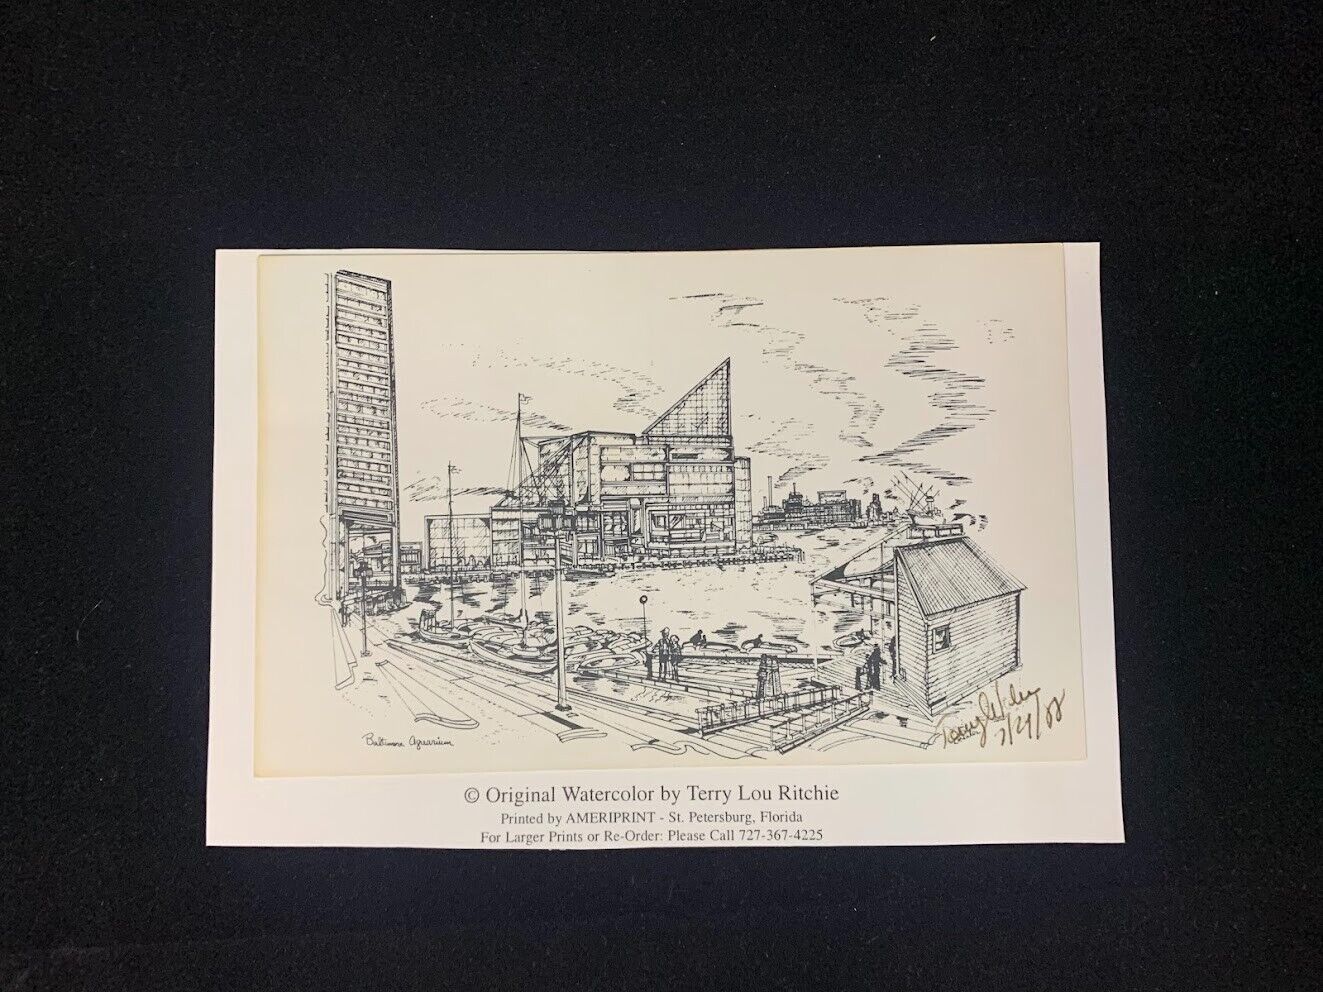 Baltimore Aquarium Vintage Post Card, Print of Original Watercolor by Terry Lou